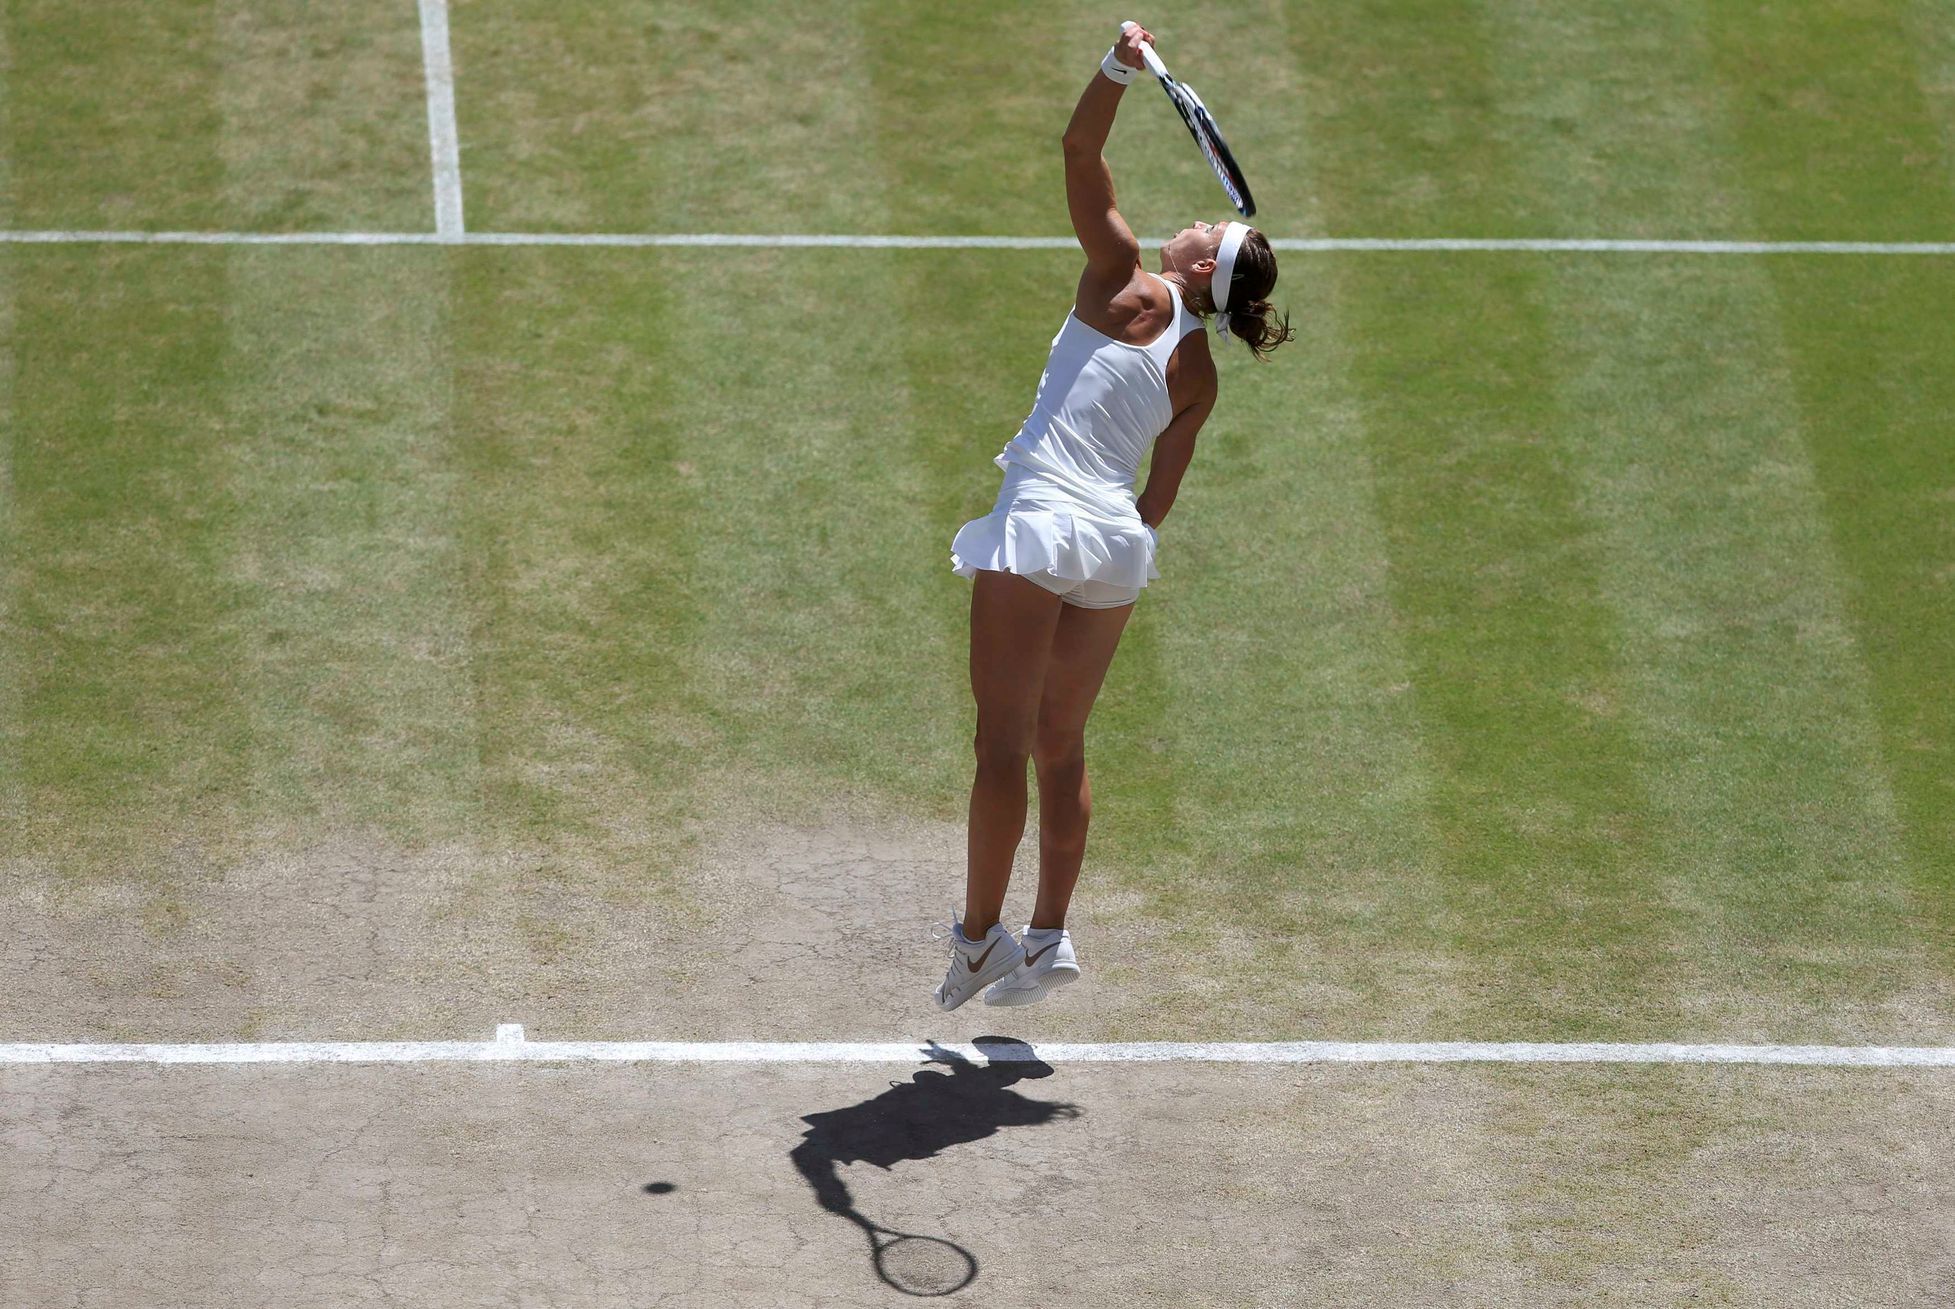 Lucie Safarova of the Czech Republic serves during her women's singles semi-final tennis match against Petra Kvitova of the Czech Republic at the Wimbledon Tennis Championships, in London